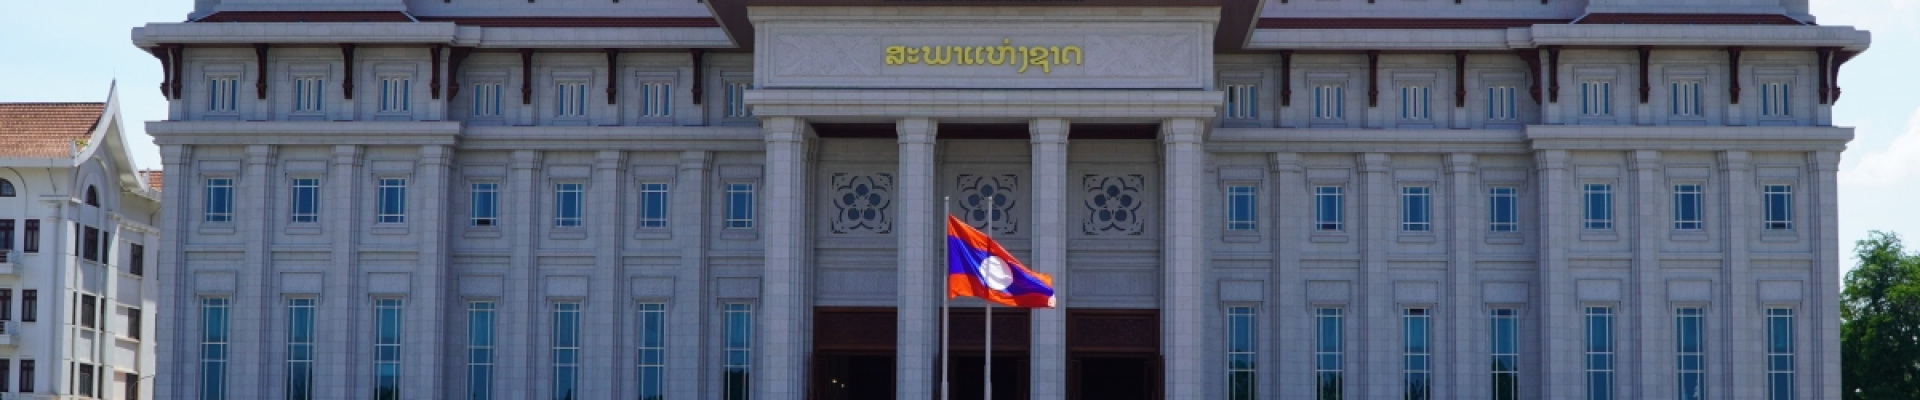 Laos Parliament building